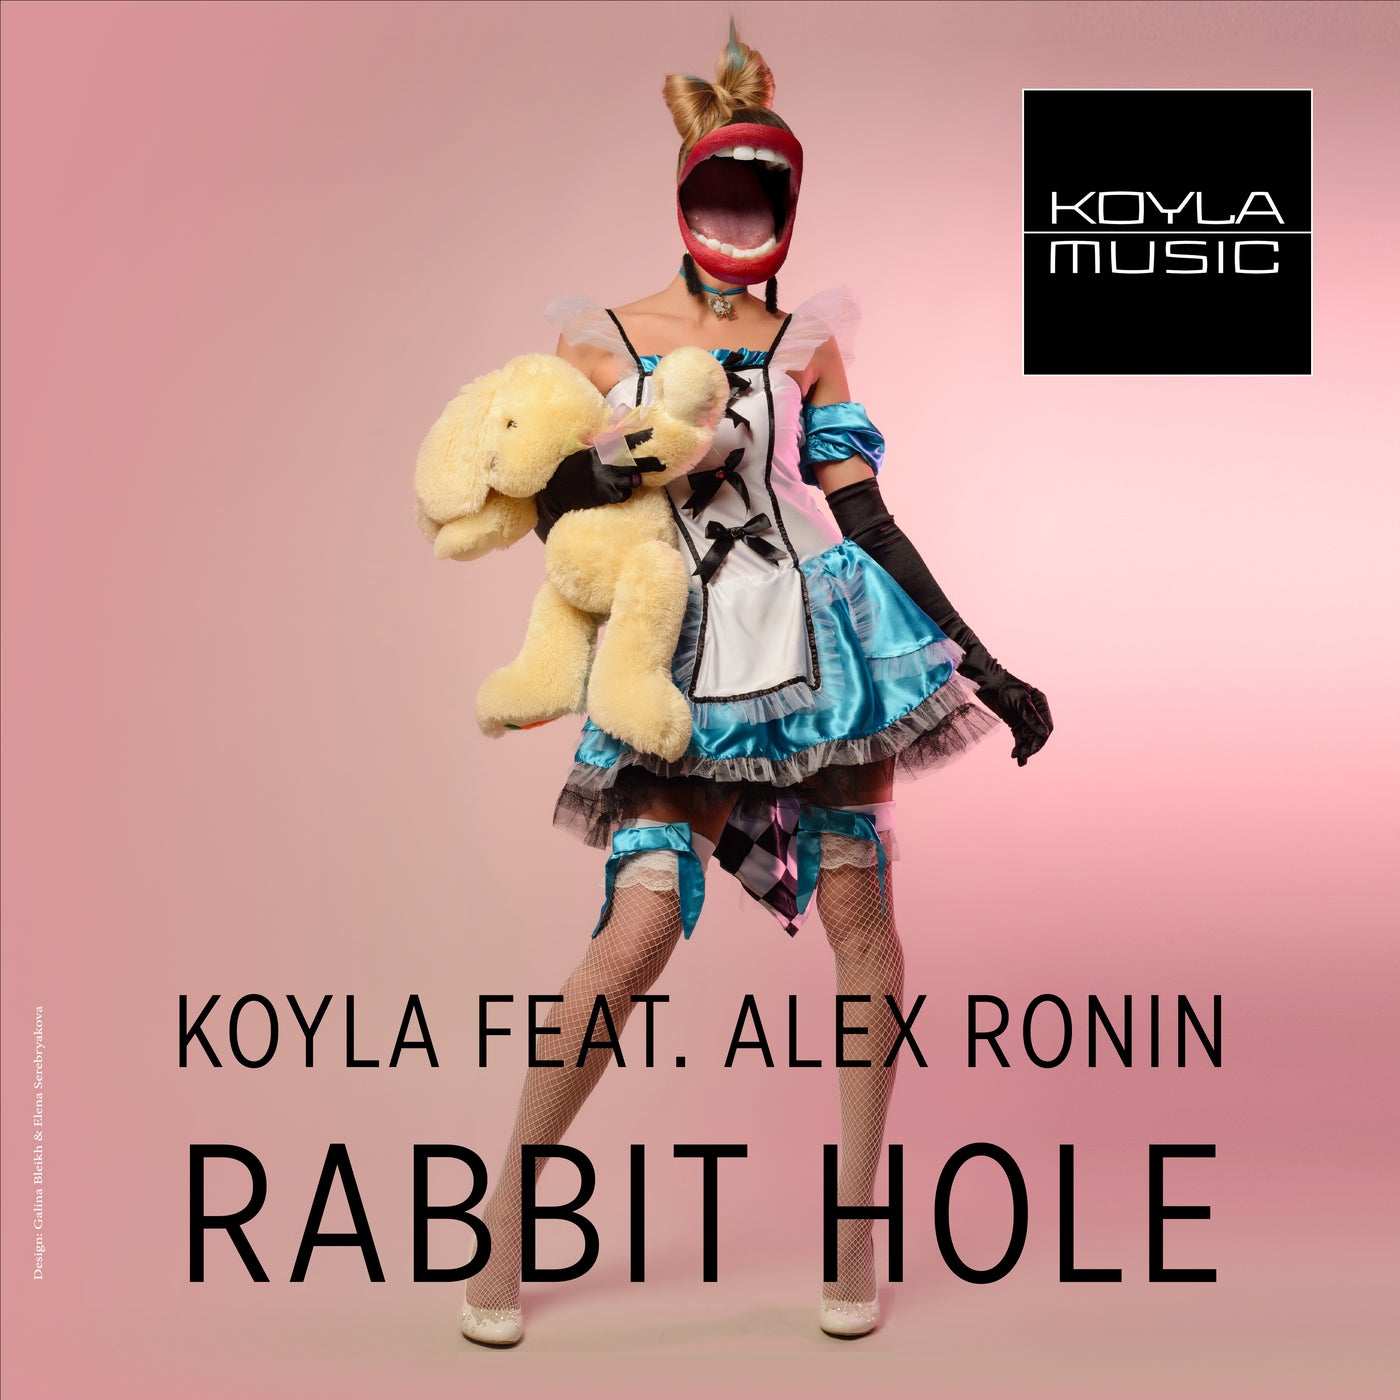 Alex Ronin music download - Beatport